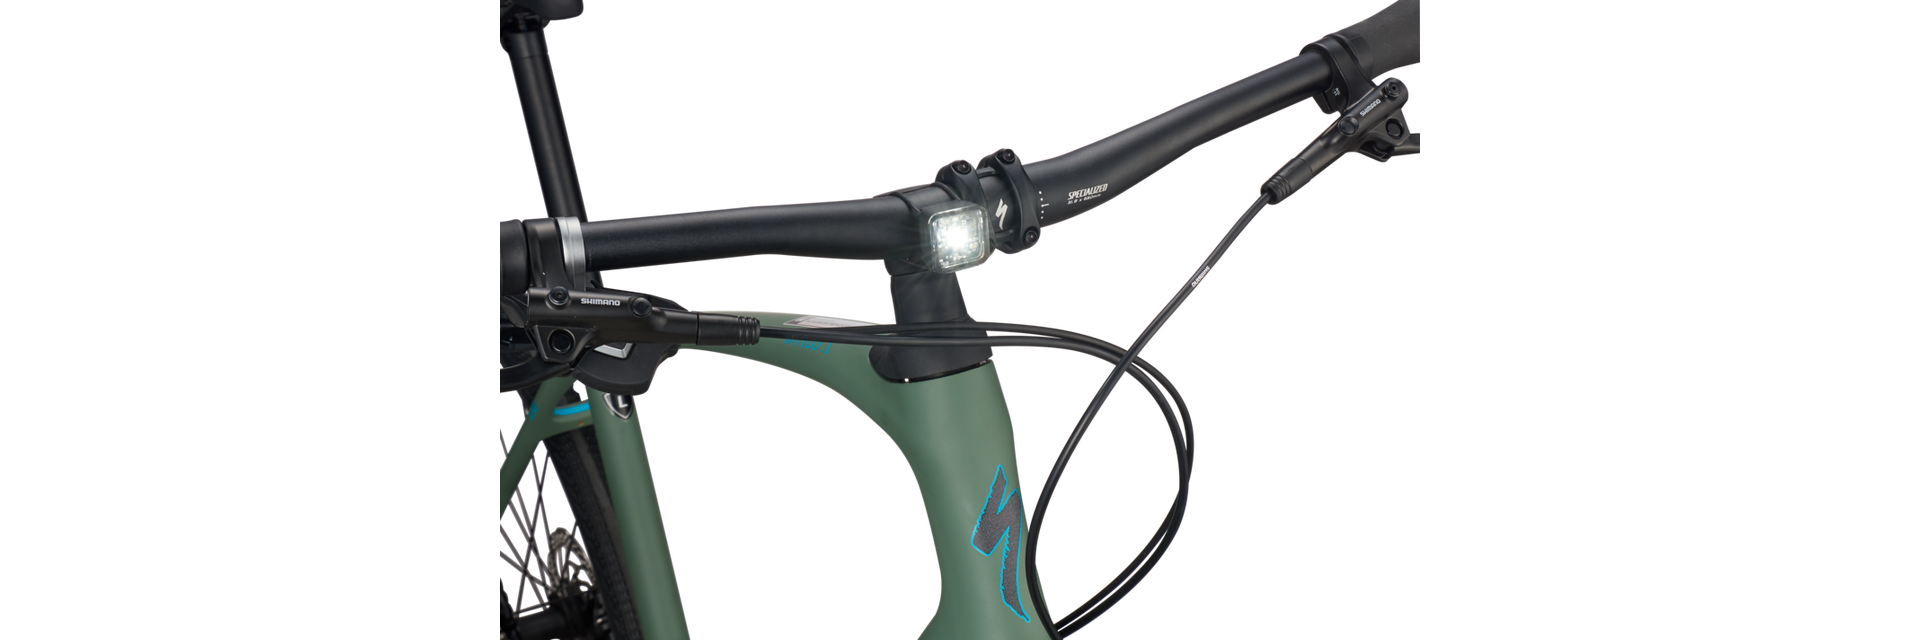 Specialized bike Headlight - Tail light combo pack.  Headlight on a bike